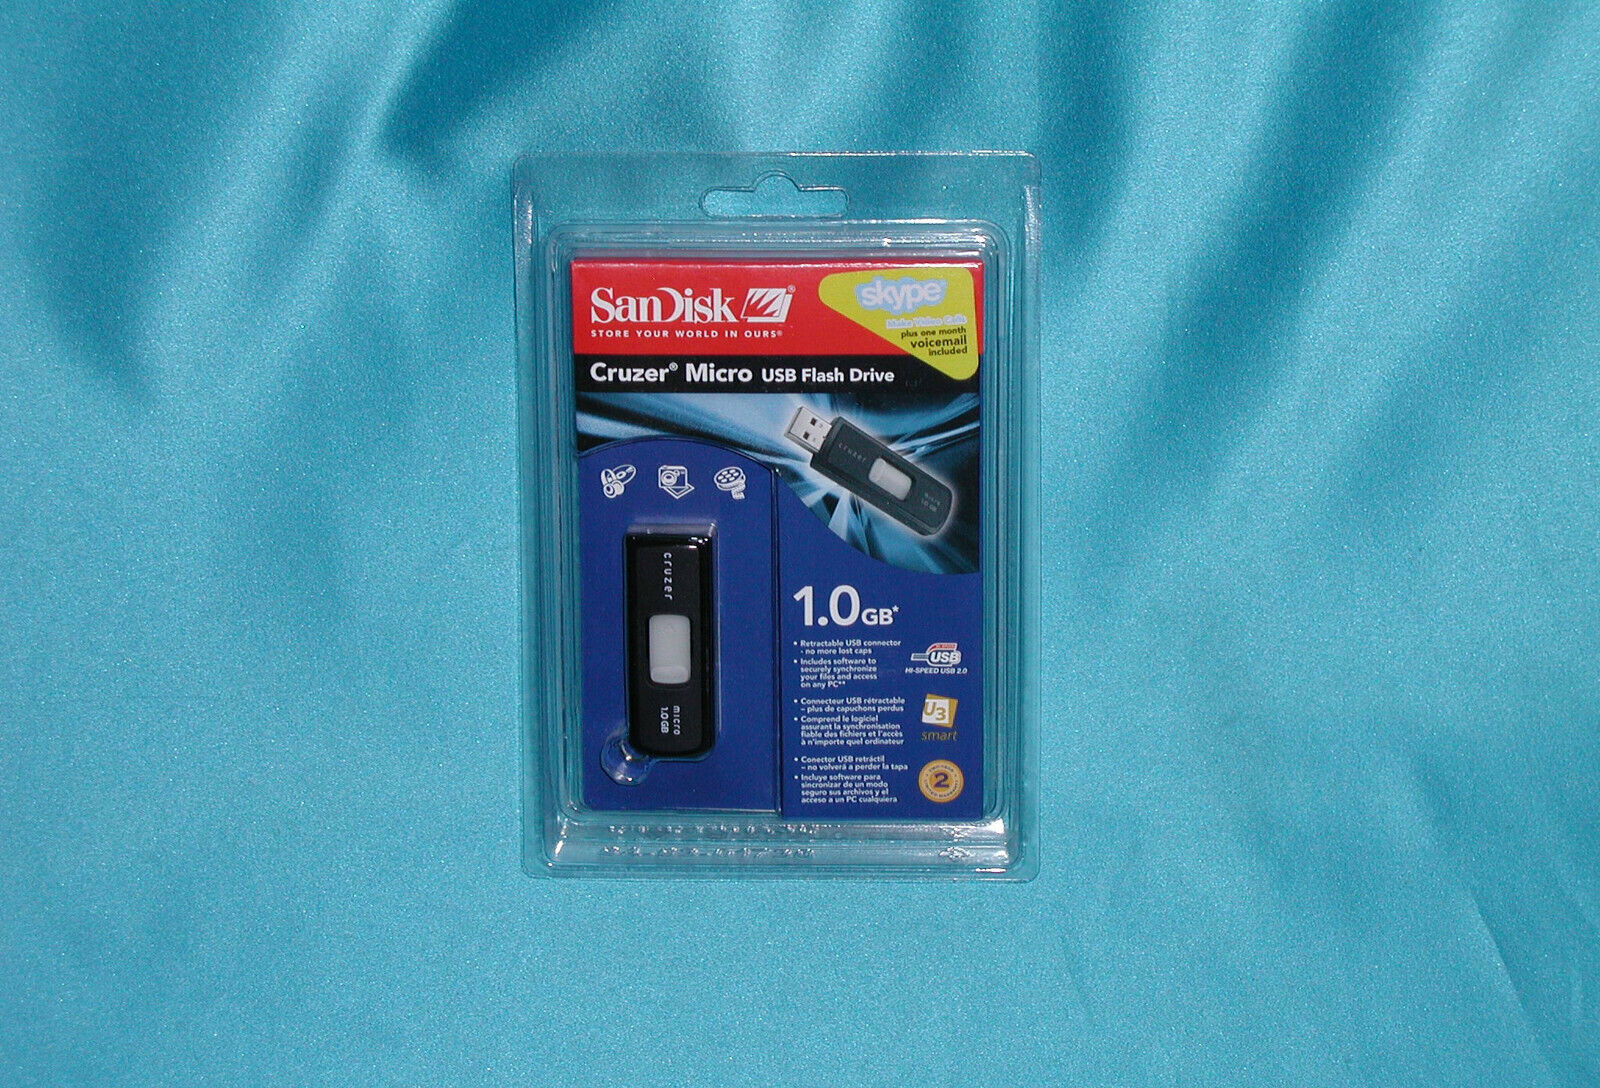 SanDisk Cruzer Micro USB Flash Drive 1.0GB VERY RARE “Factory New”WOW SALE